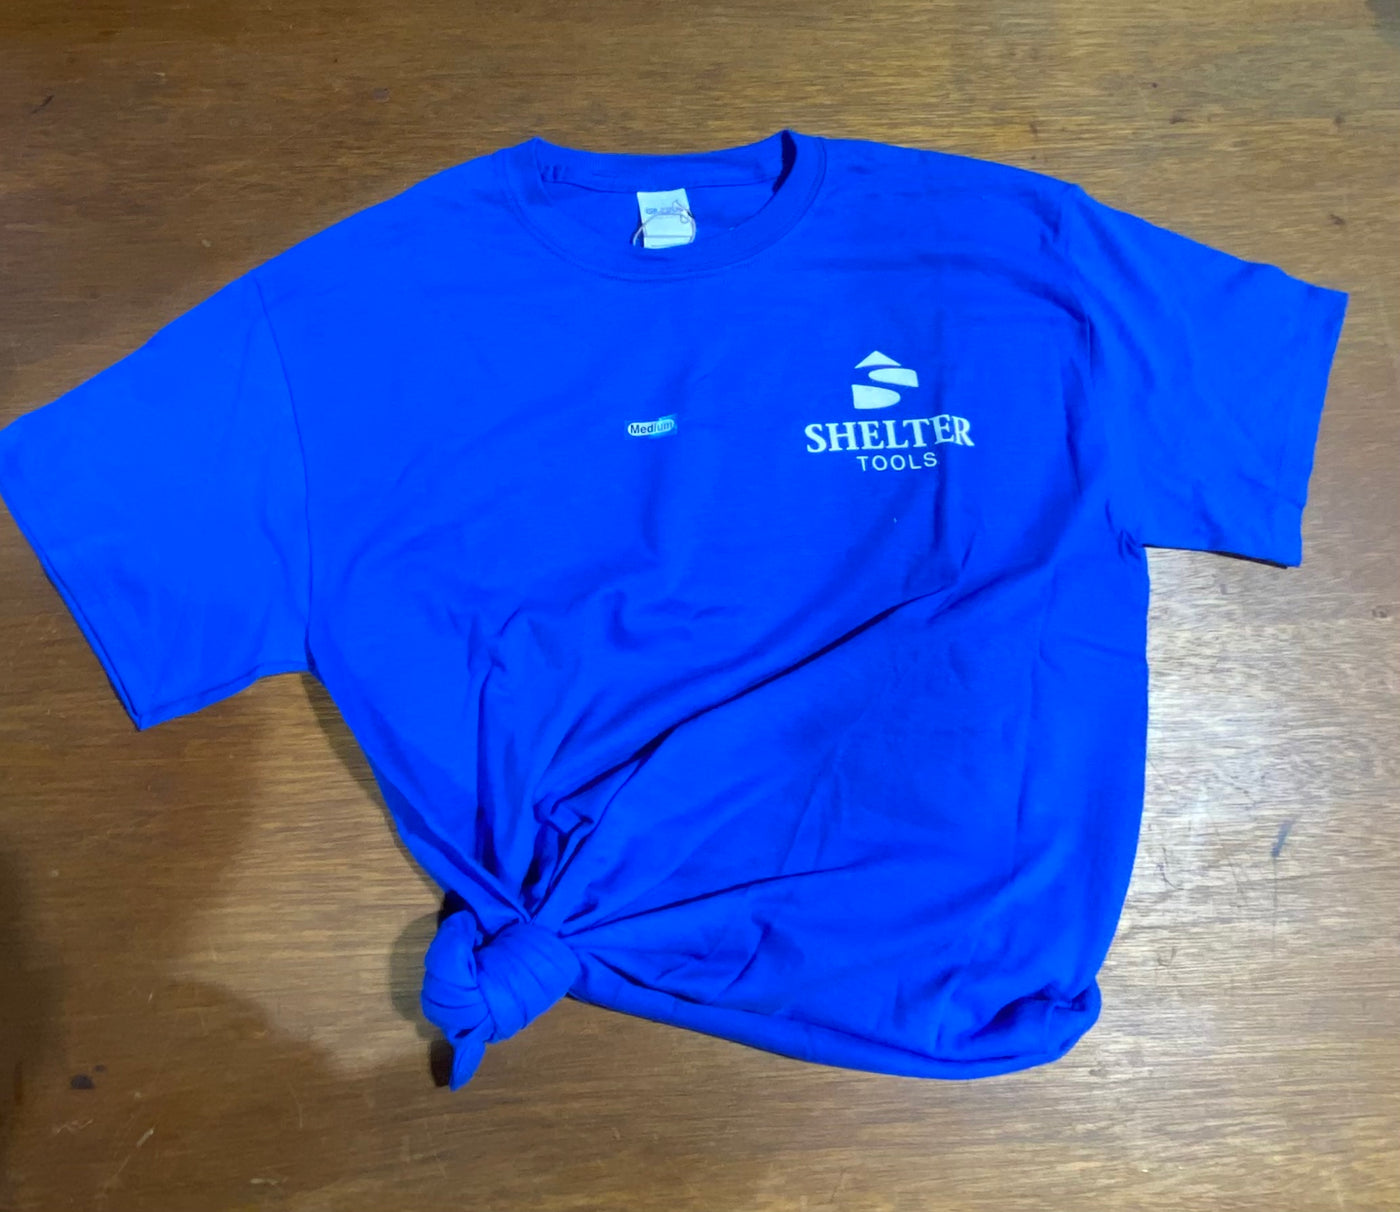 Shelter Tools T-Shirt